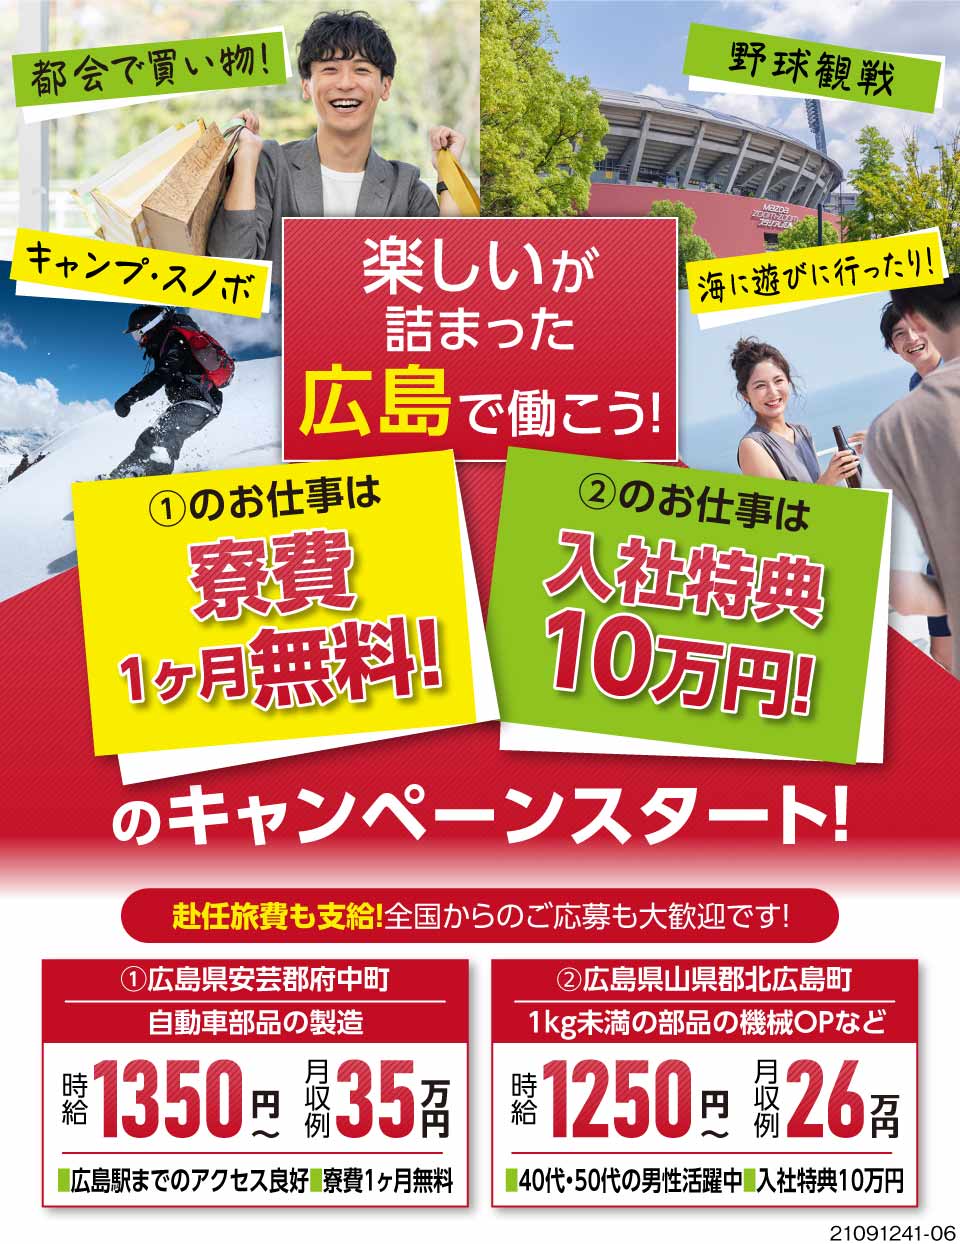 Mantoman株式会社 滋賀県甲賀市 楽しい広島へgo 月収例35万円の高 400835 工場求人のジョブコンプラス